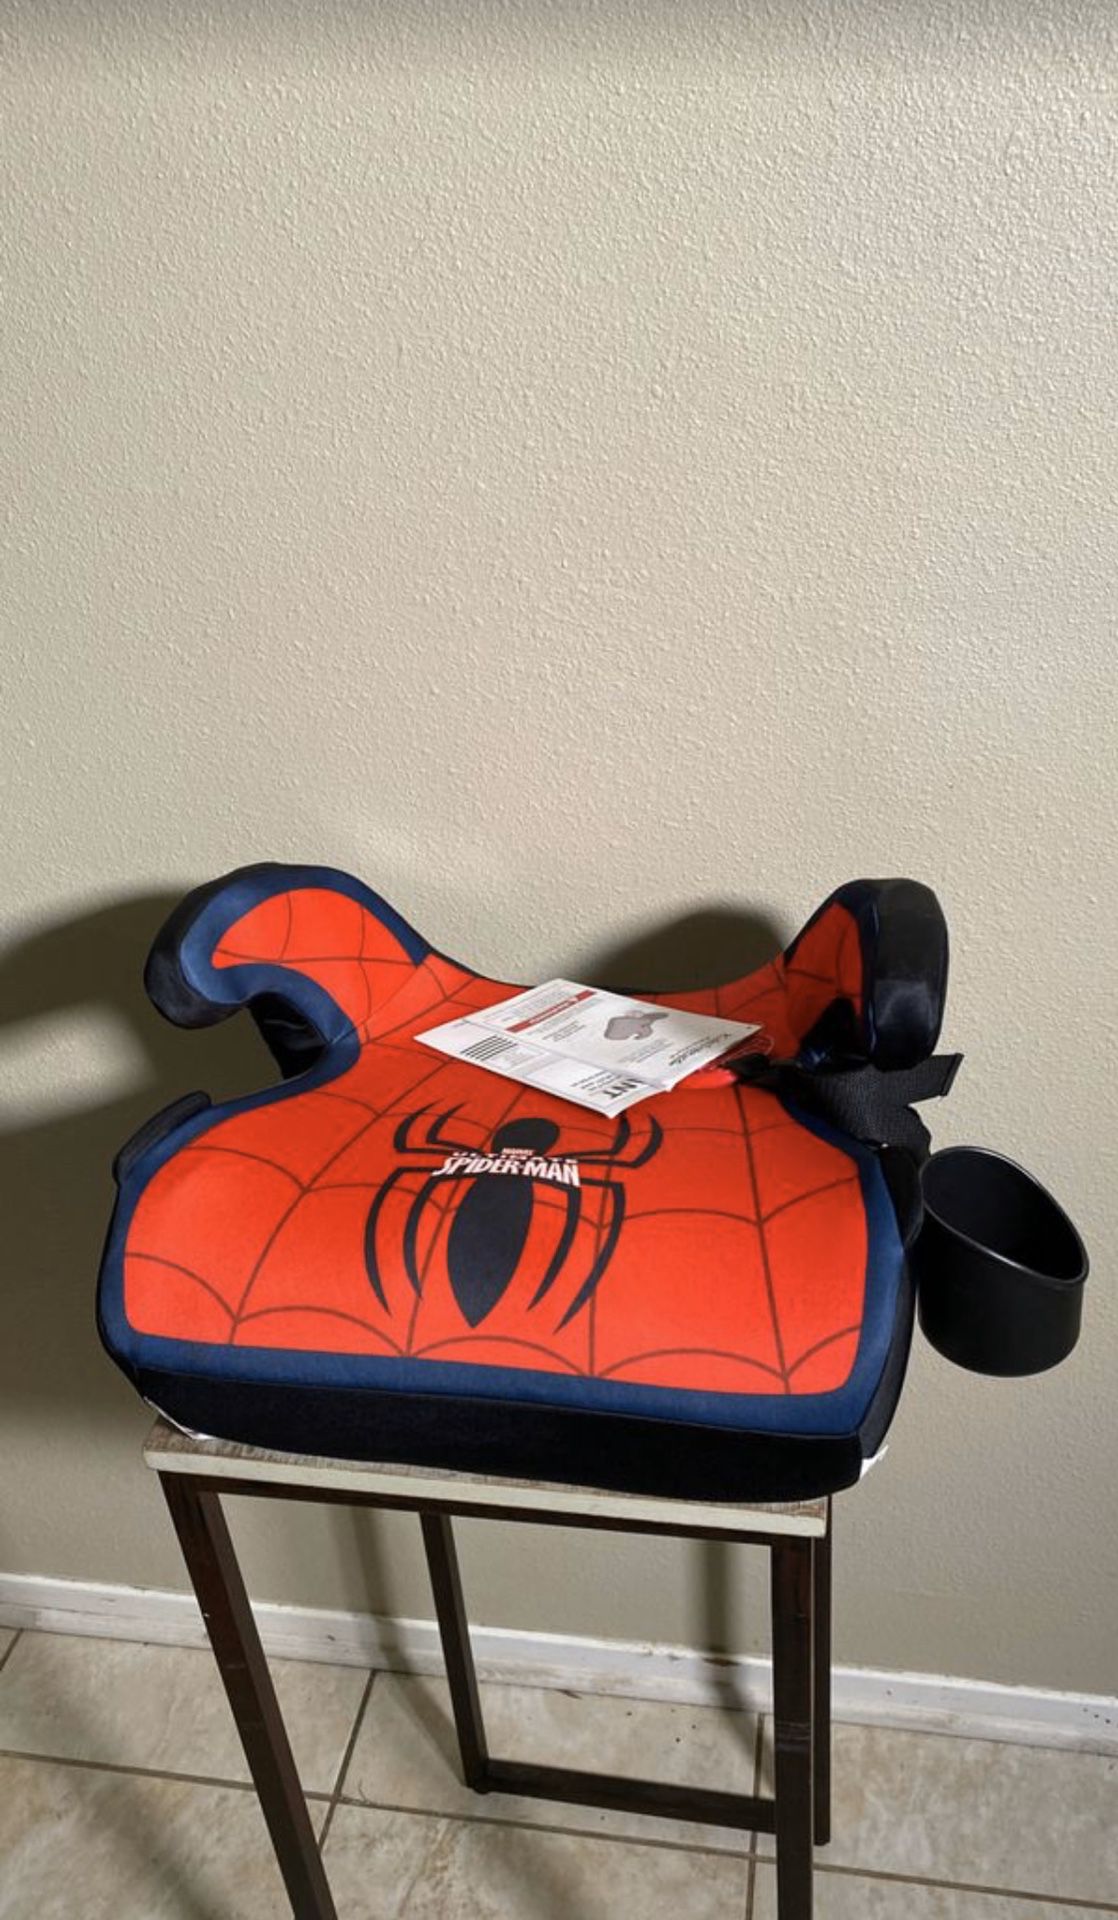 Spider man booster car seat